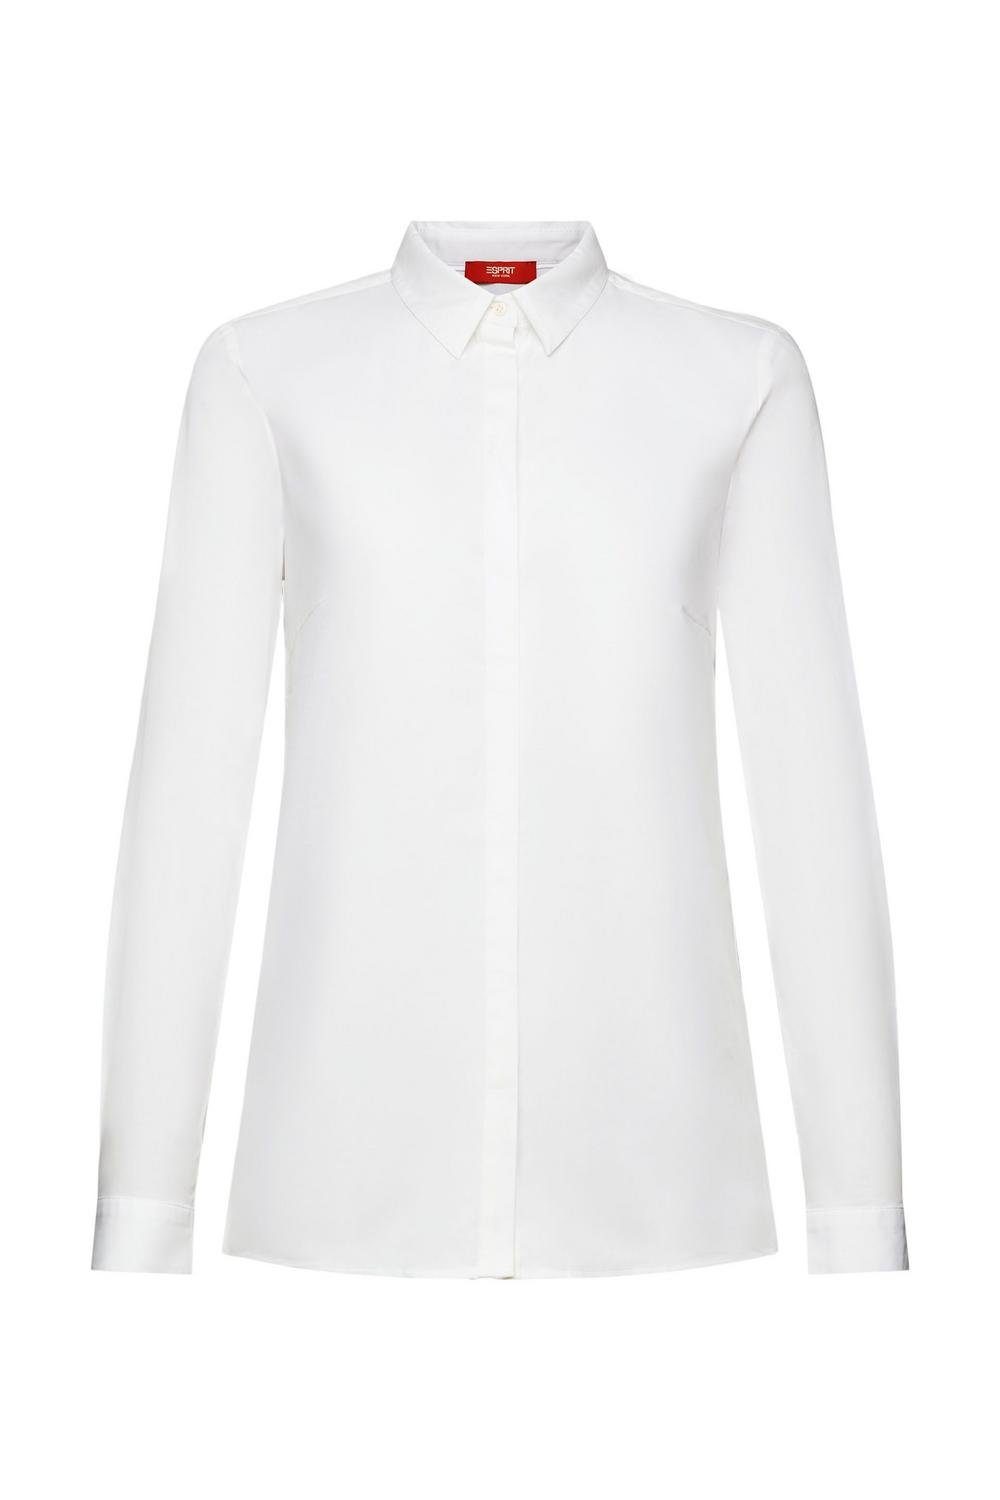 Esprit Blusenshirt basic blouse, WHITE